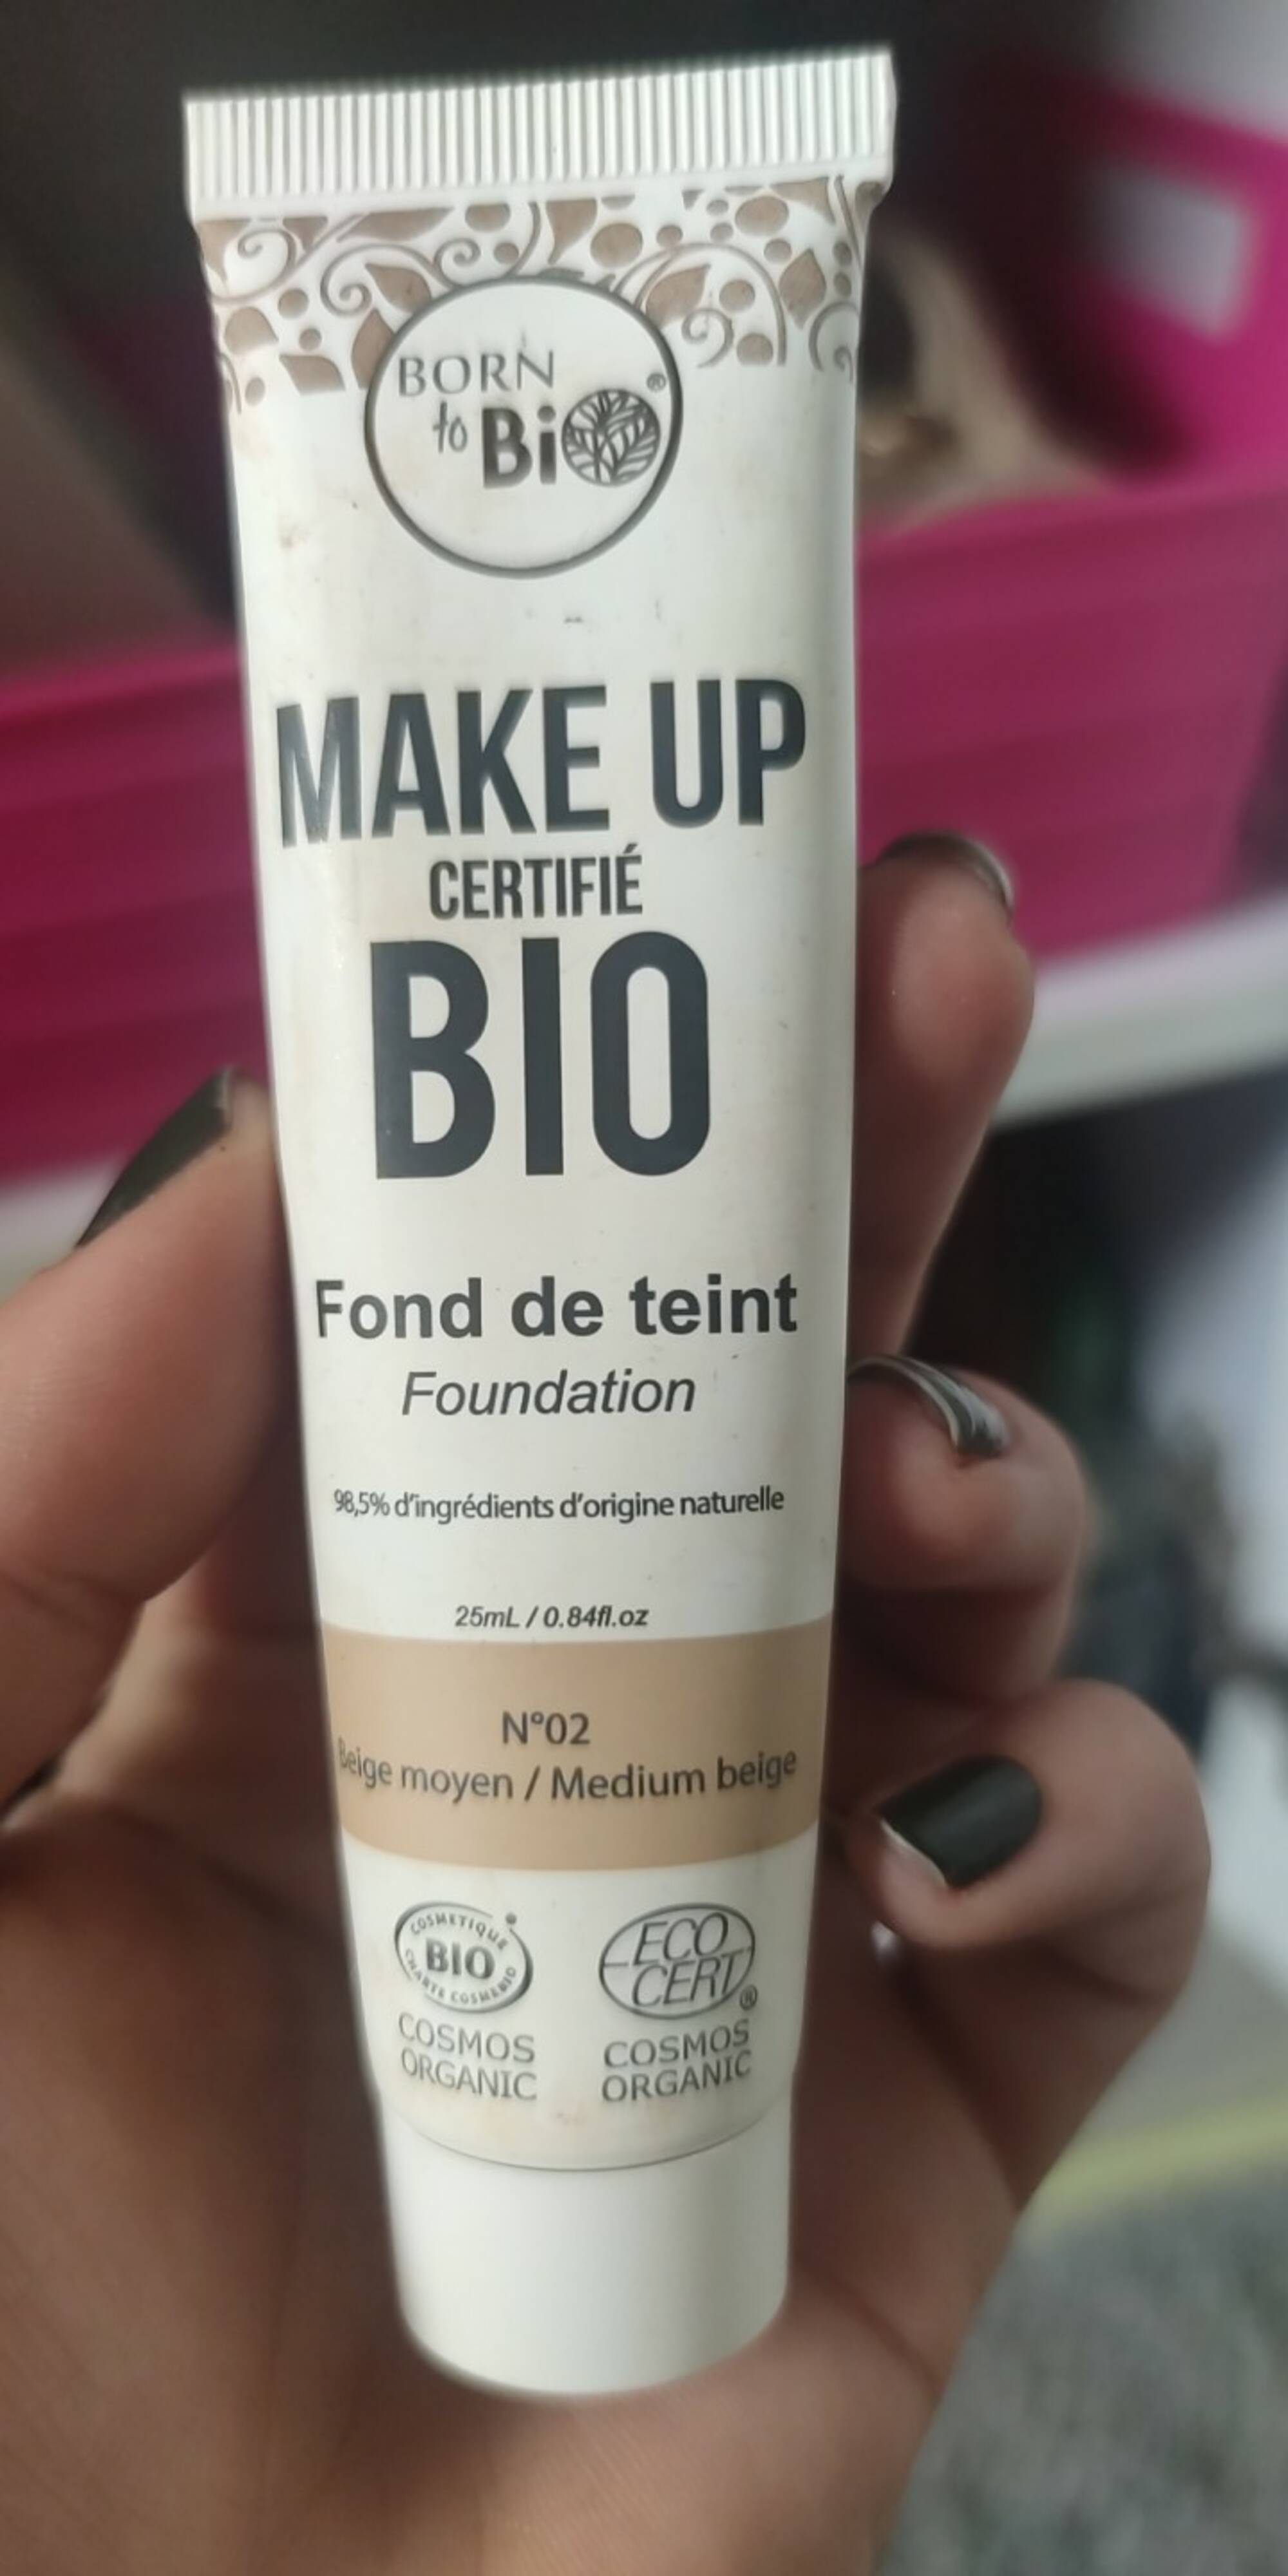 BORN TO BIO - Make up - Fond de teint